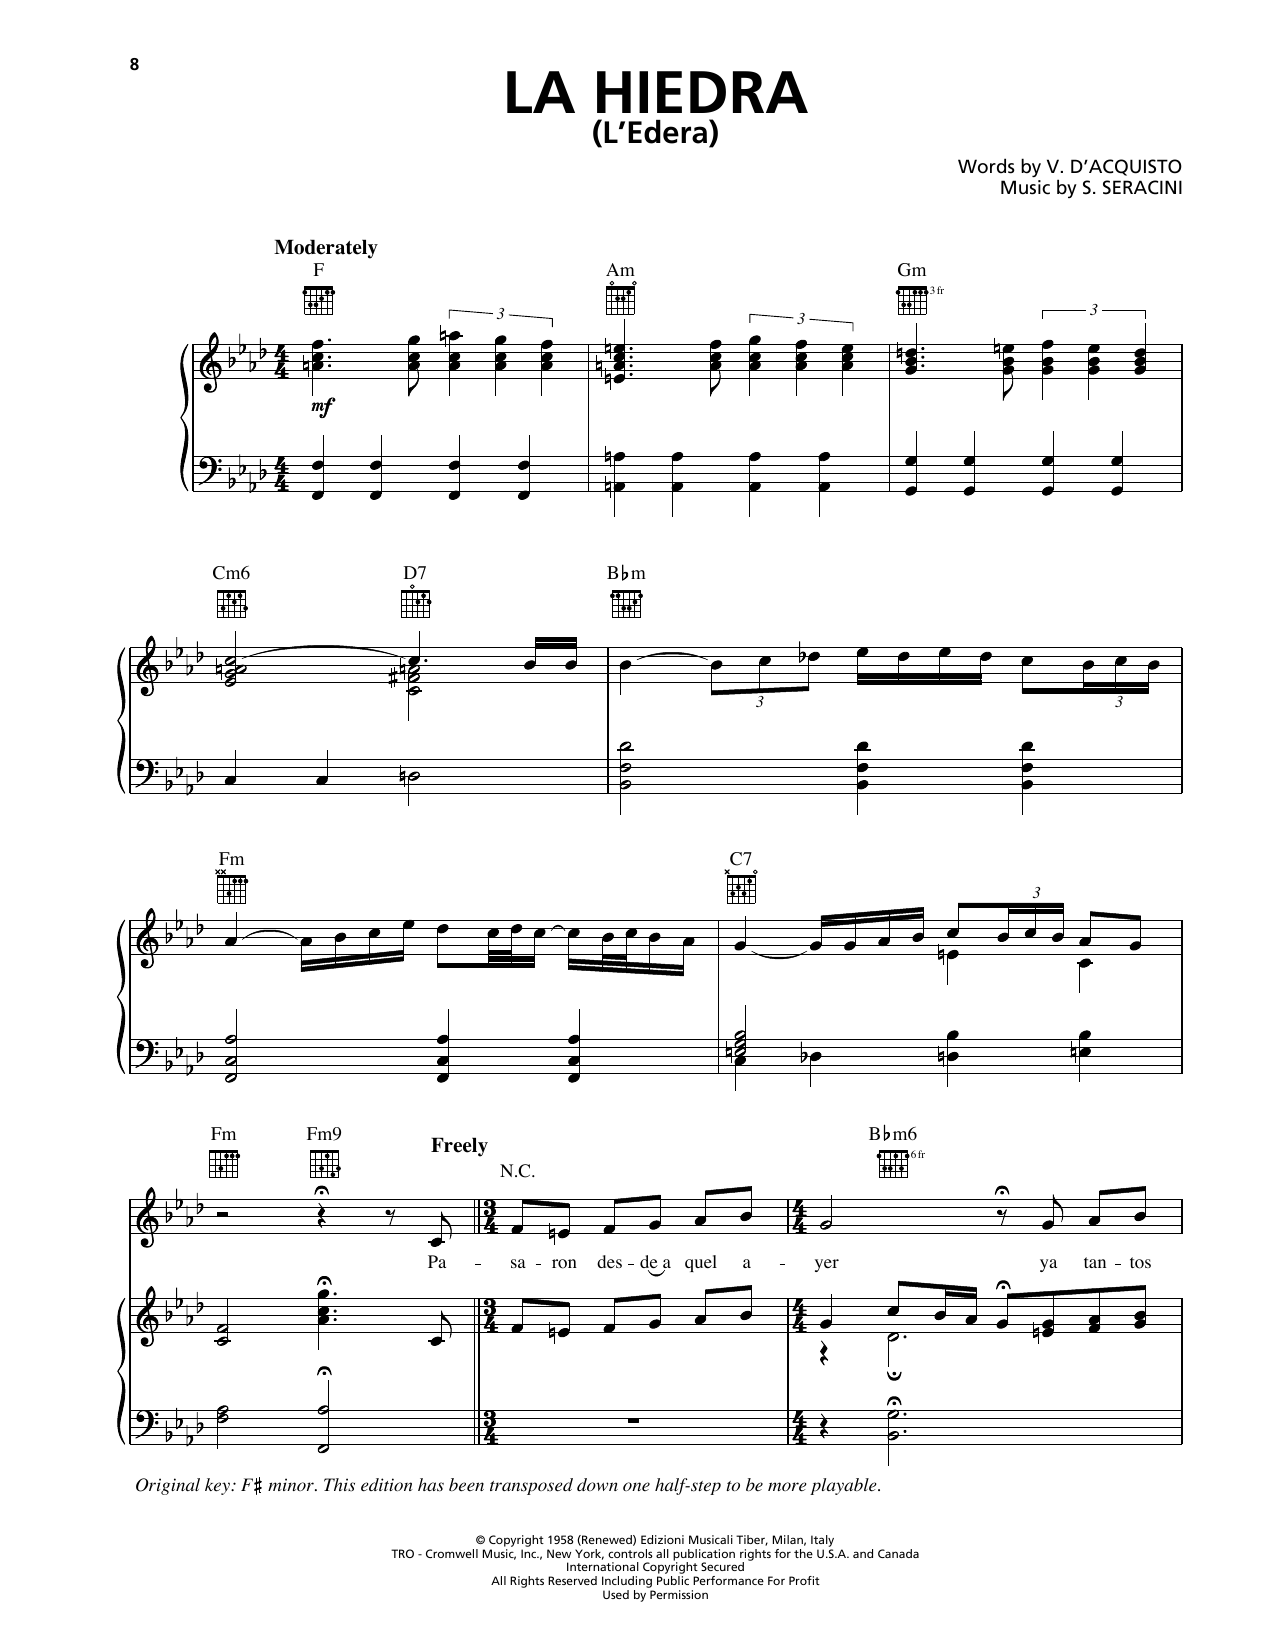 Trio Los Panchos La Hiedra (L'Edera) Sheet Music Notes & Chords for Piano, Vocal & Guitar Chords (Right-Hand Melody) - Download or Print PDF